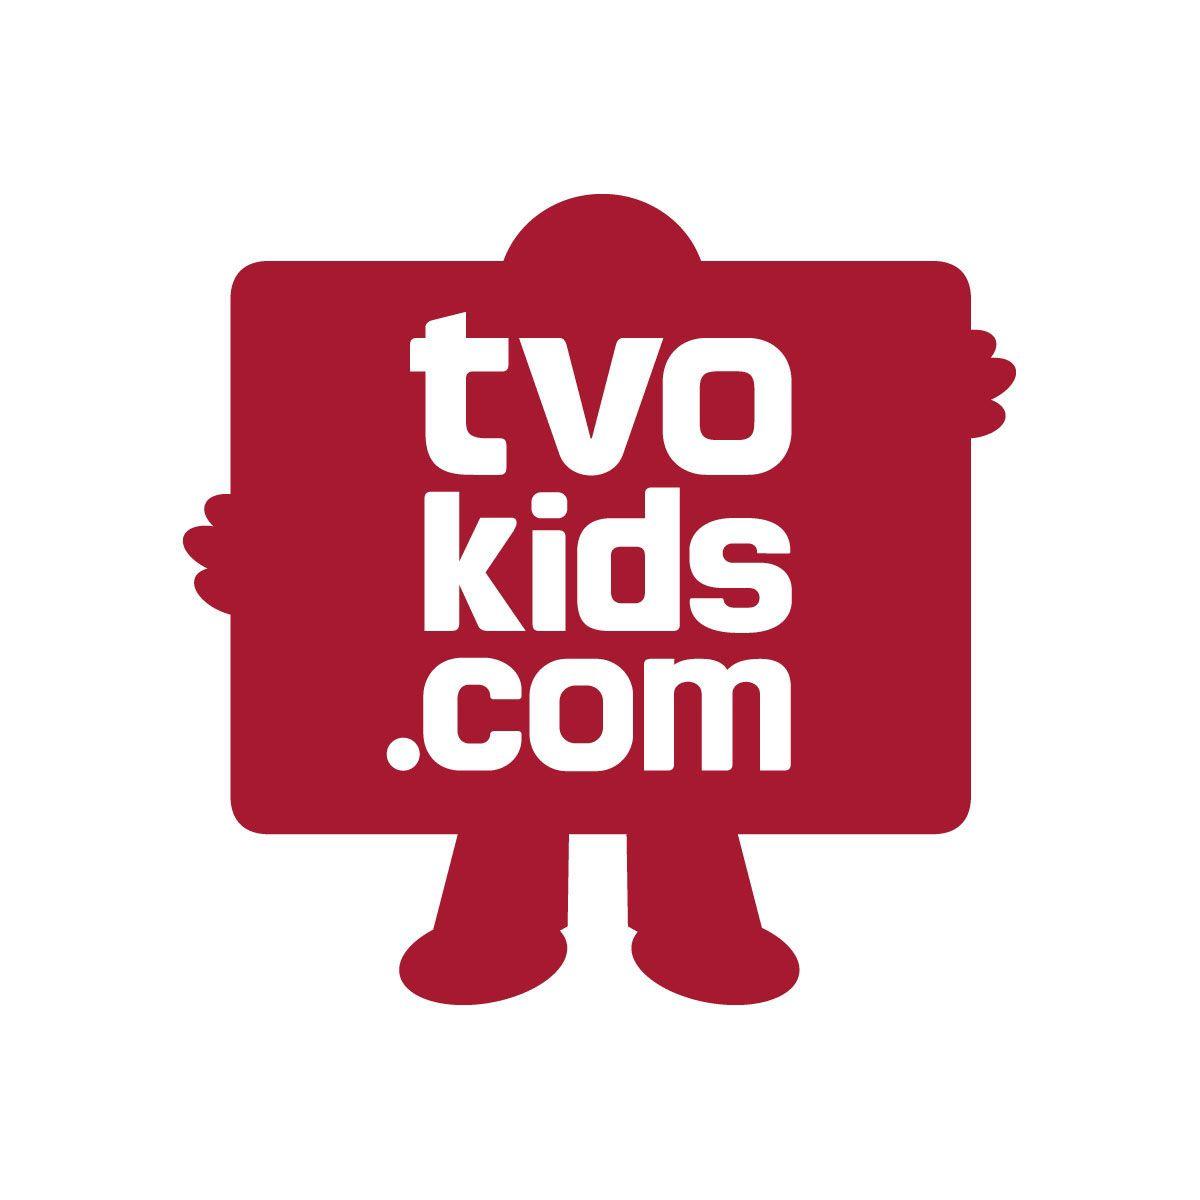 TVOKids Logo - Image - TVOKids.comd.jpg | Logopedia | FANDOM powered by Wikia